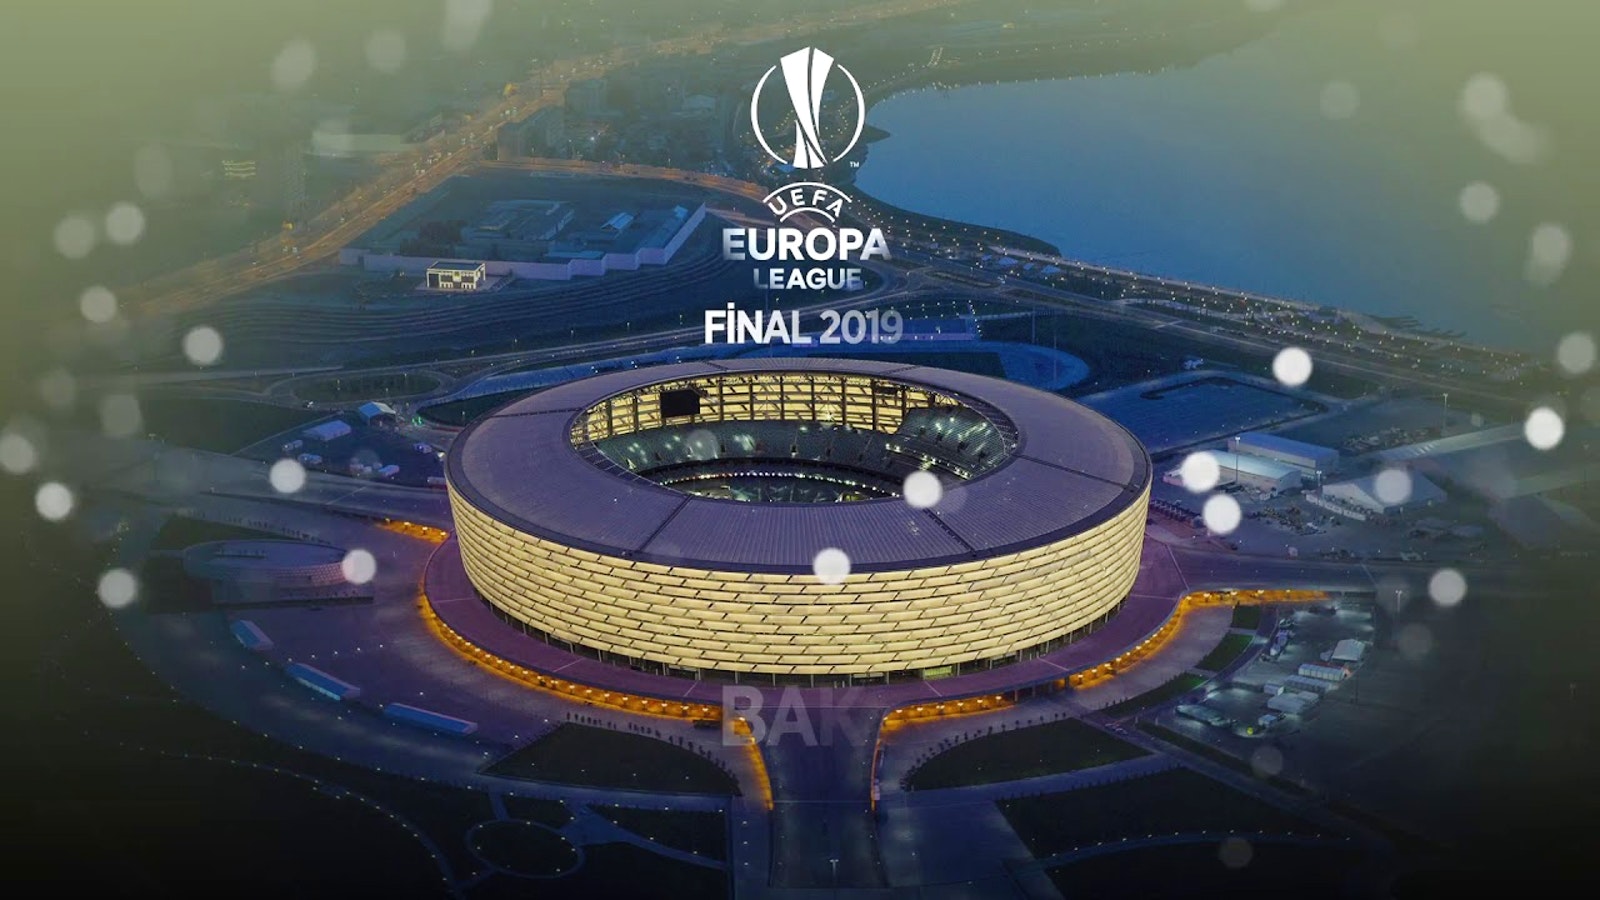 UEFA Europa League 201819 final match stadium and new design